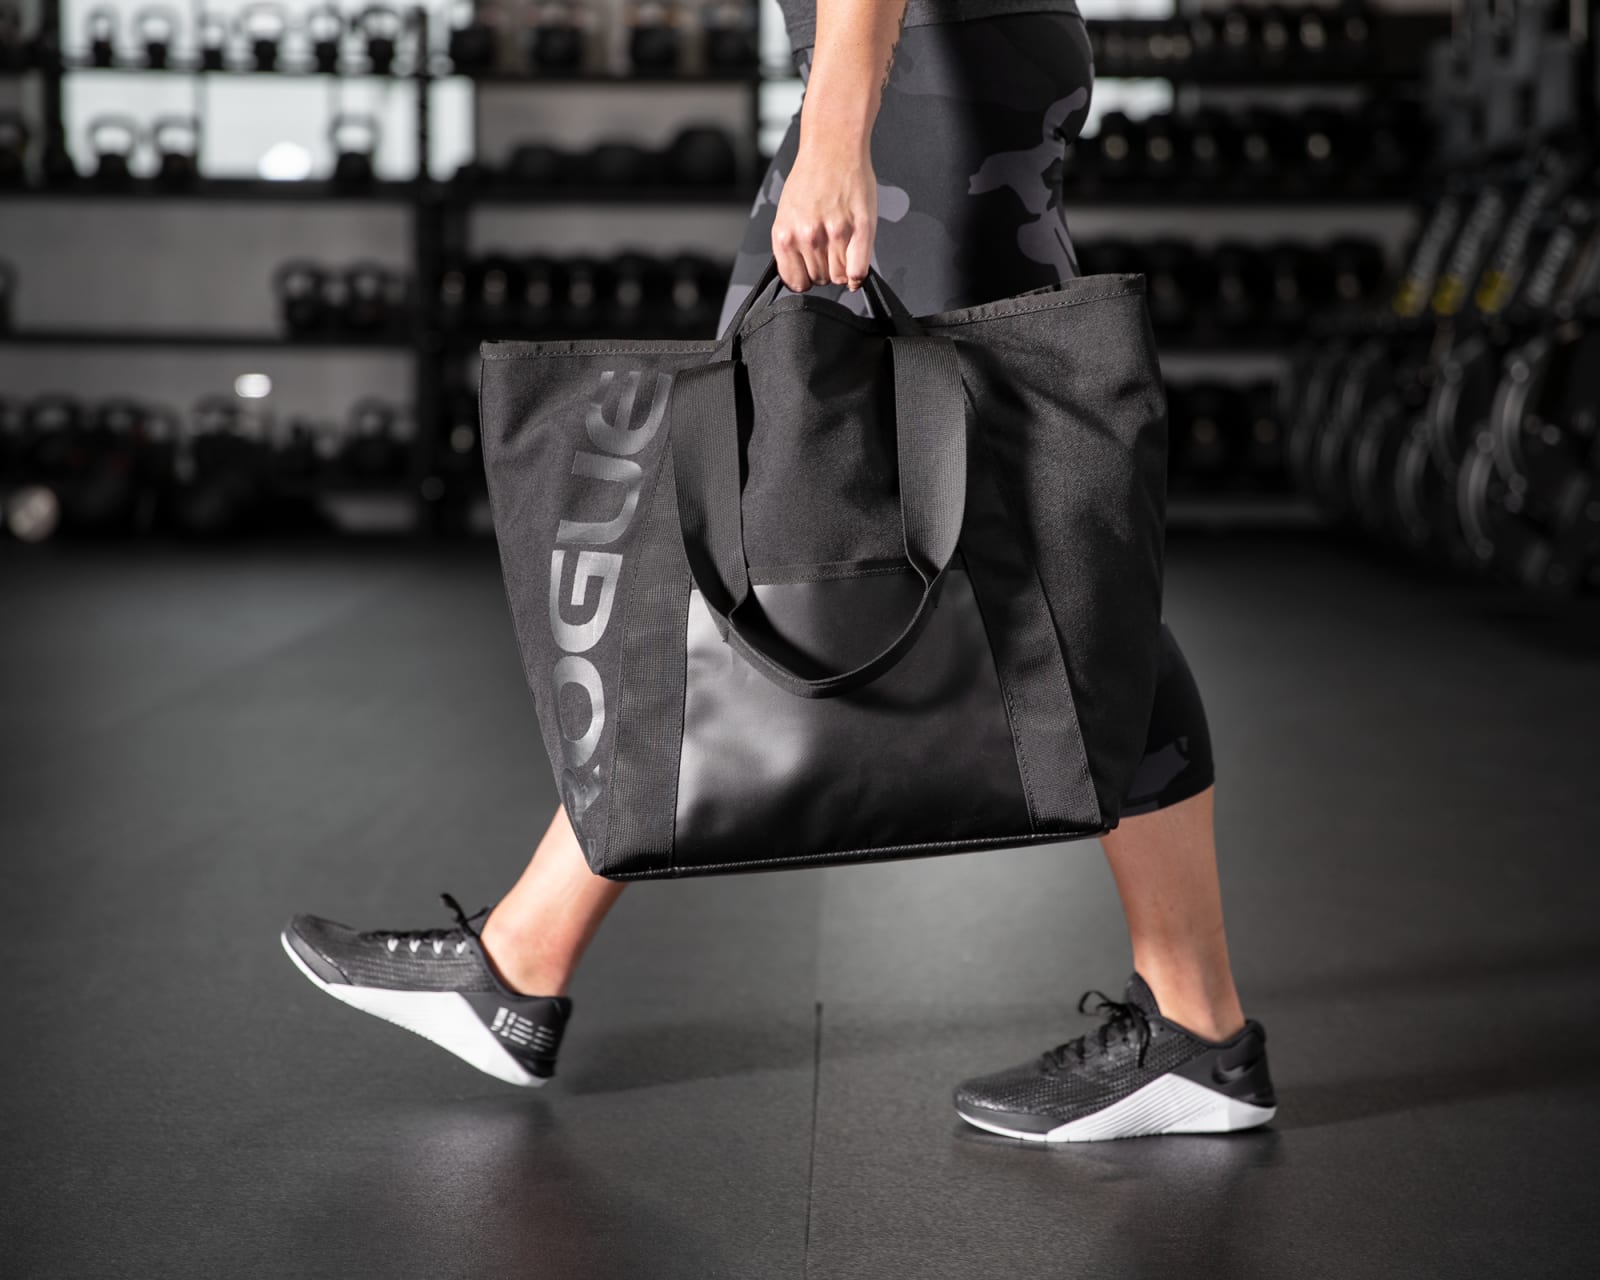 Nike One Women's Training Tote Bag